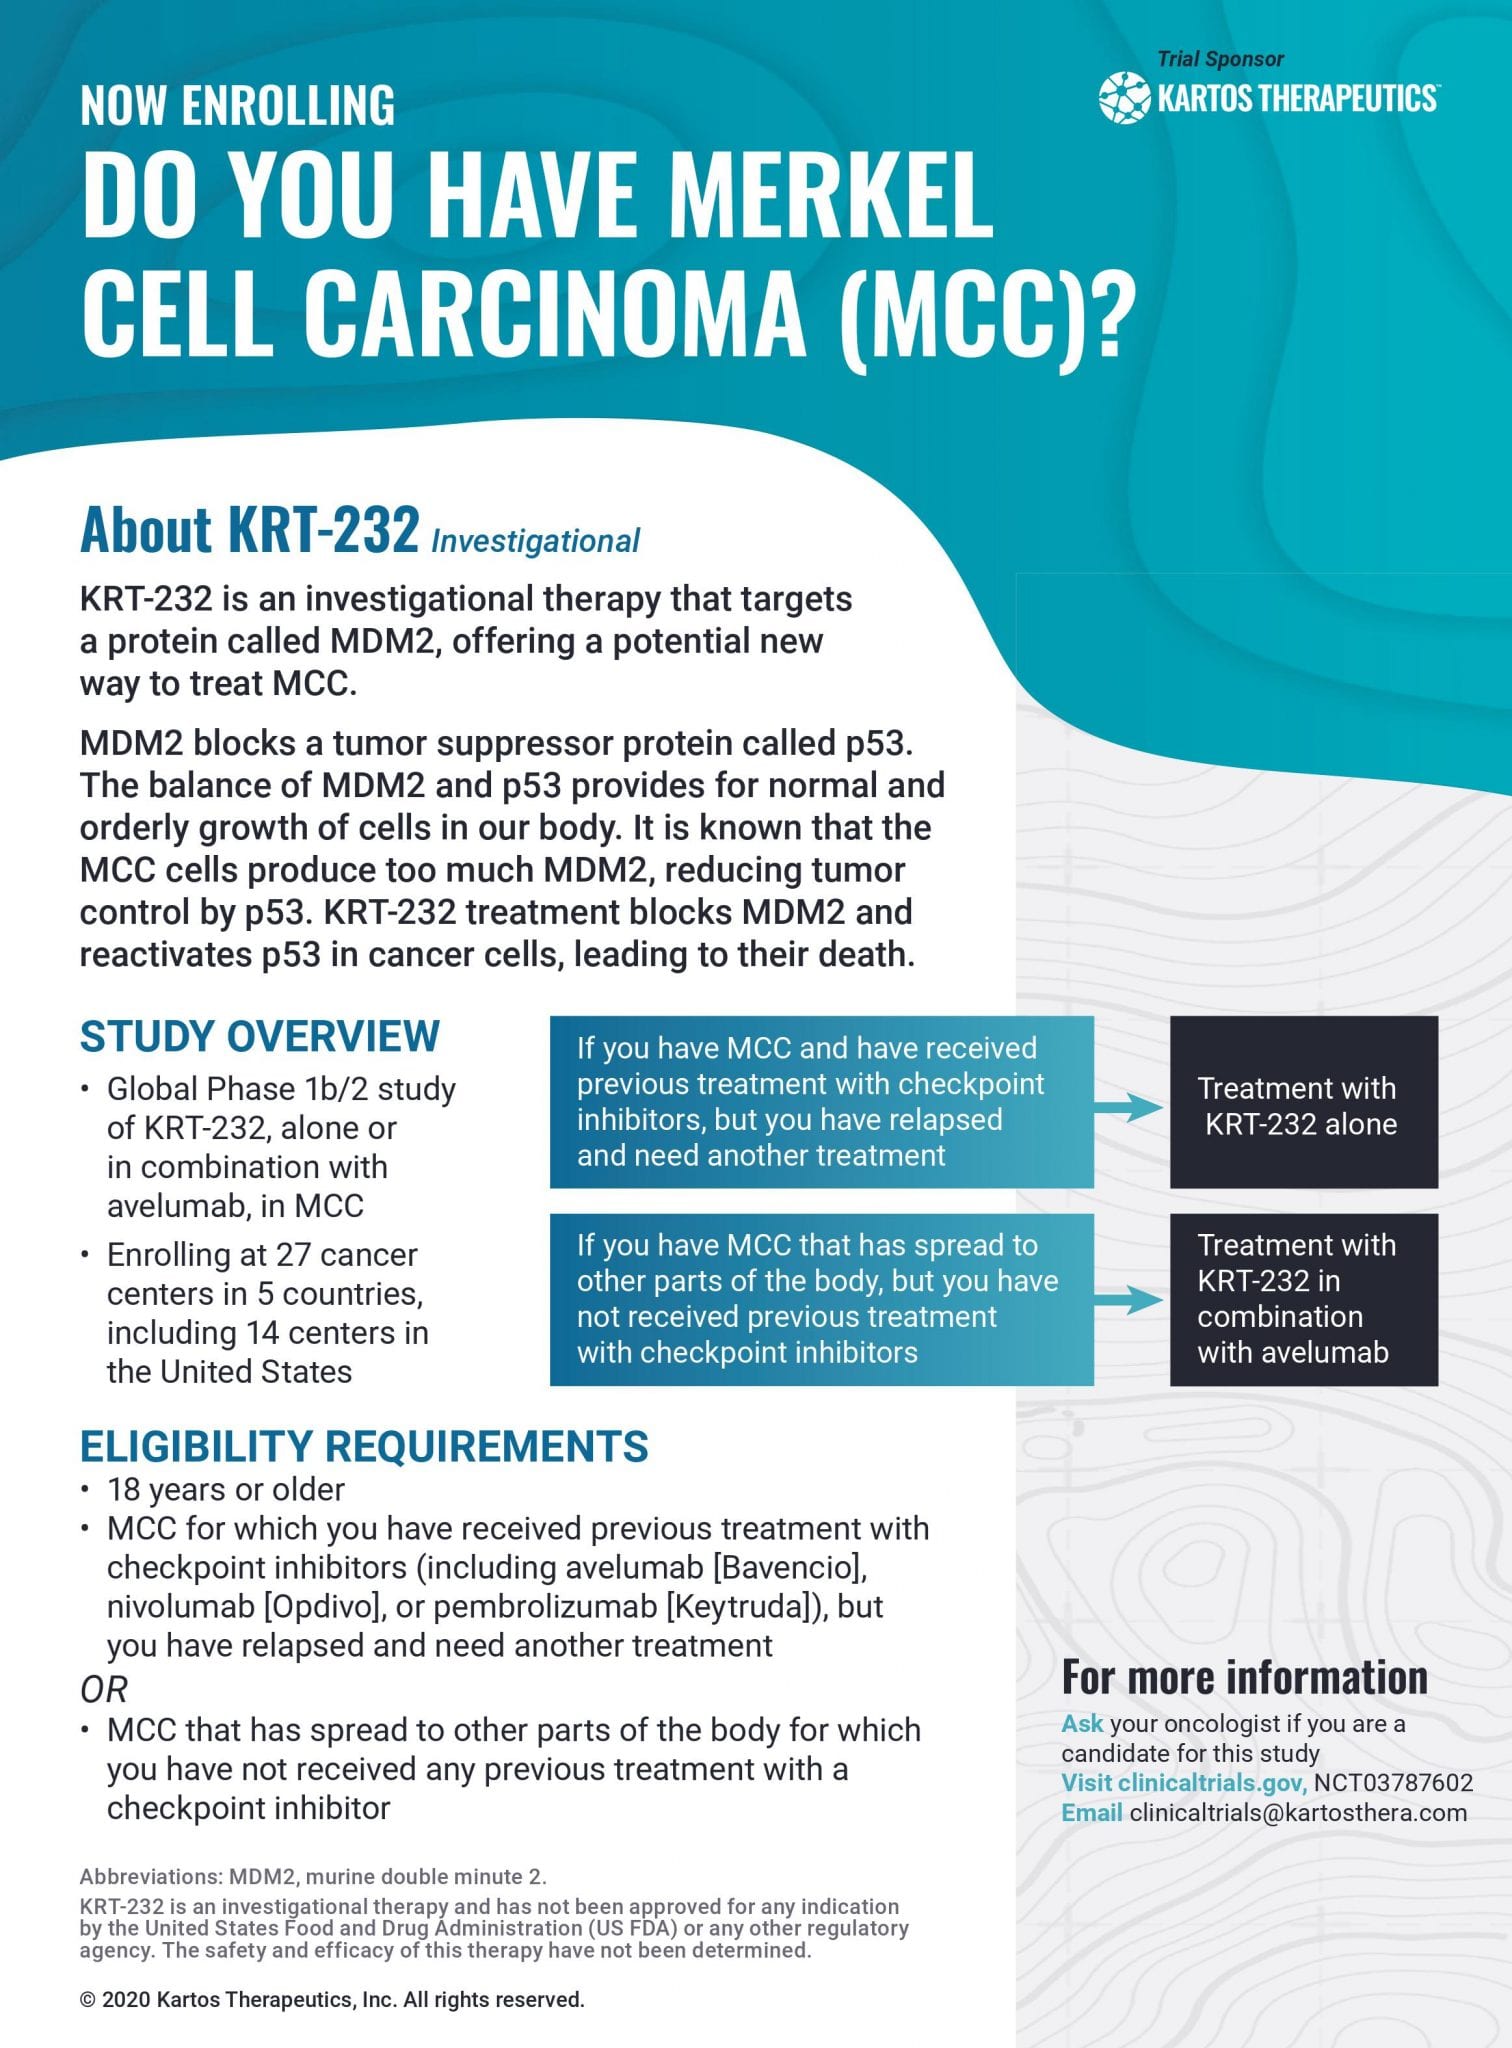 Krt 232 Clinical Trial For Merkel Cell Carcinoma Merkel Cell Carcinoma